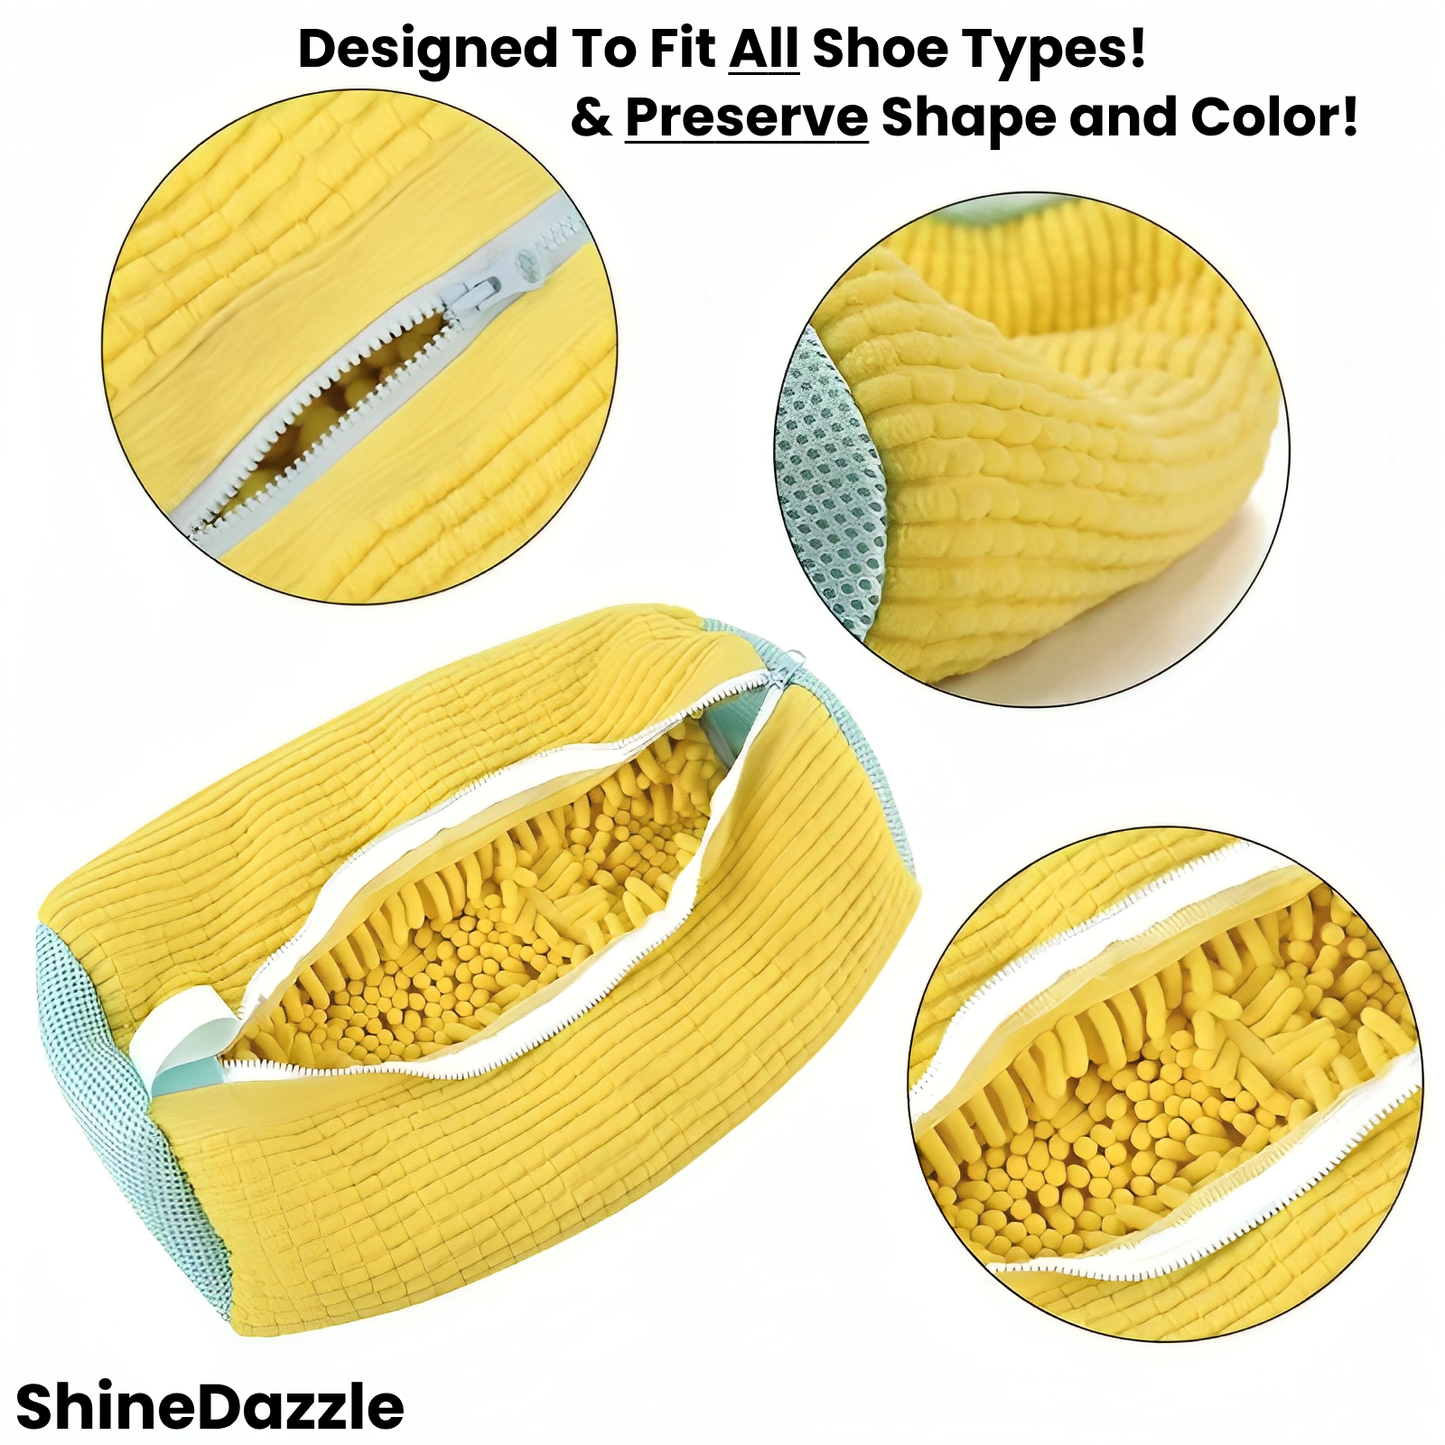 Dazzling Bristle Shoe Bag™